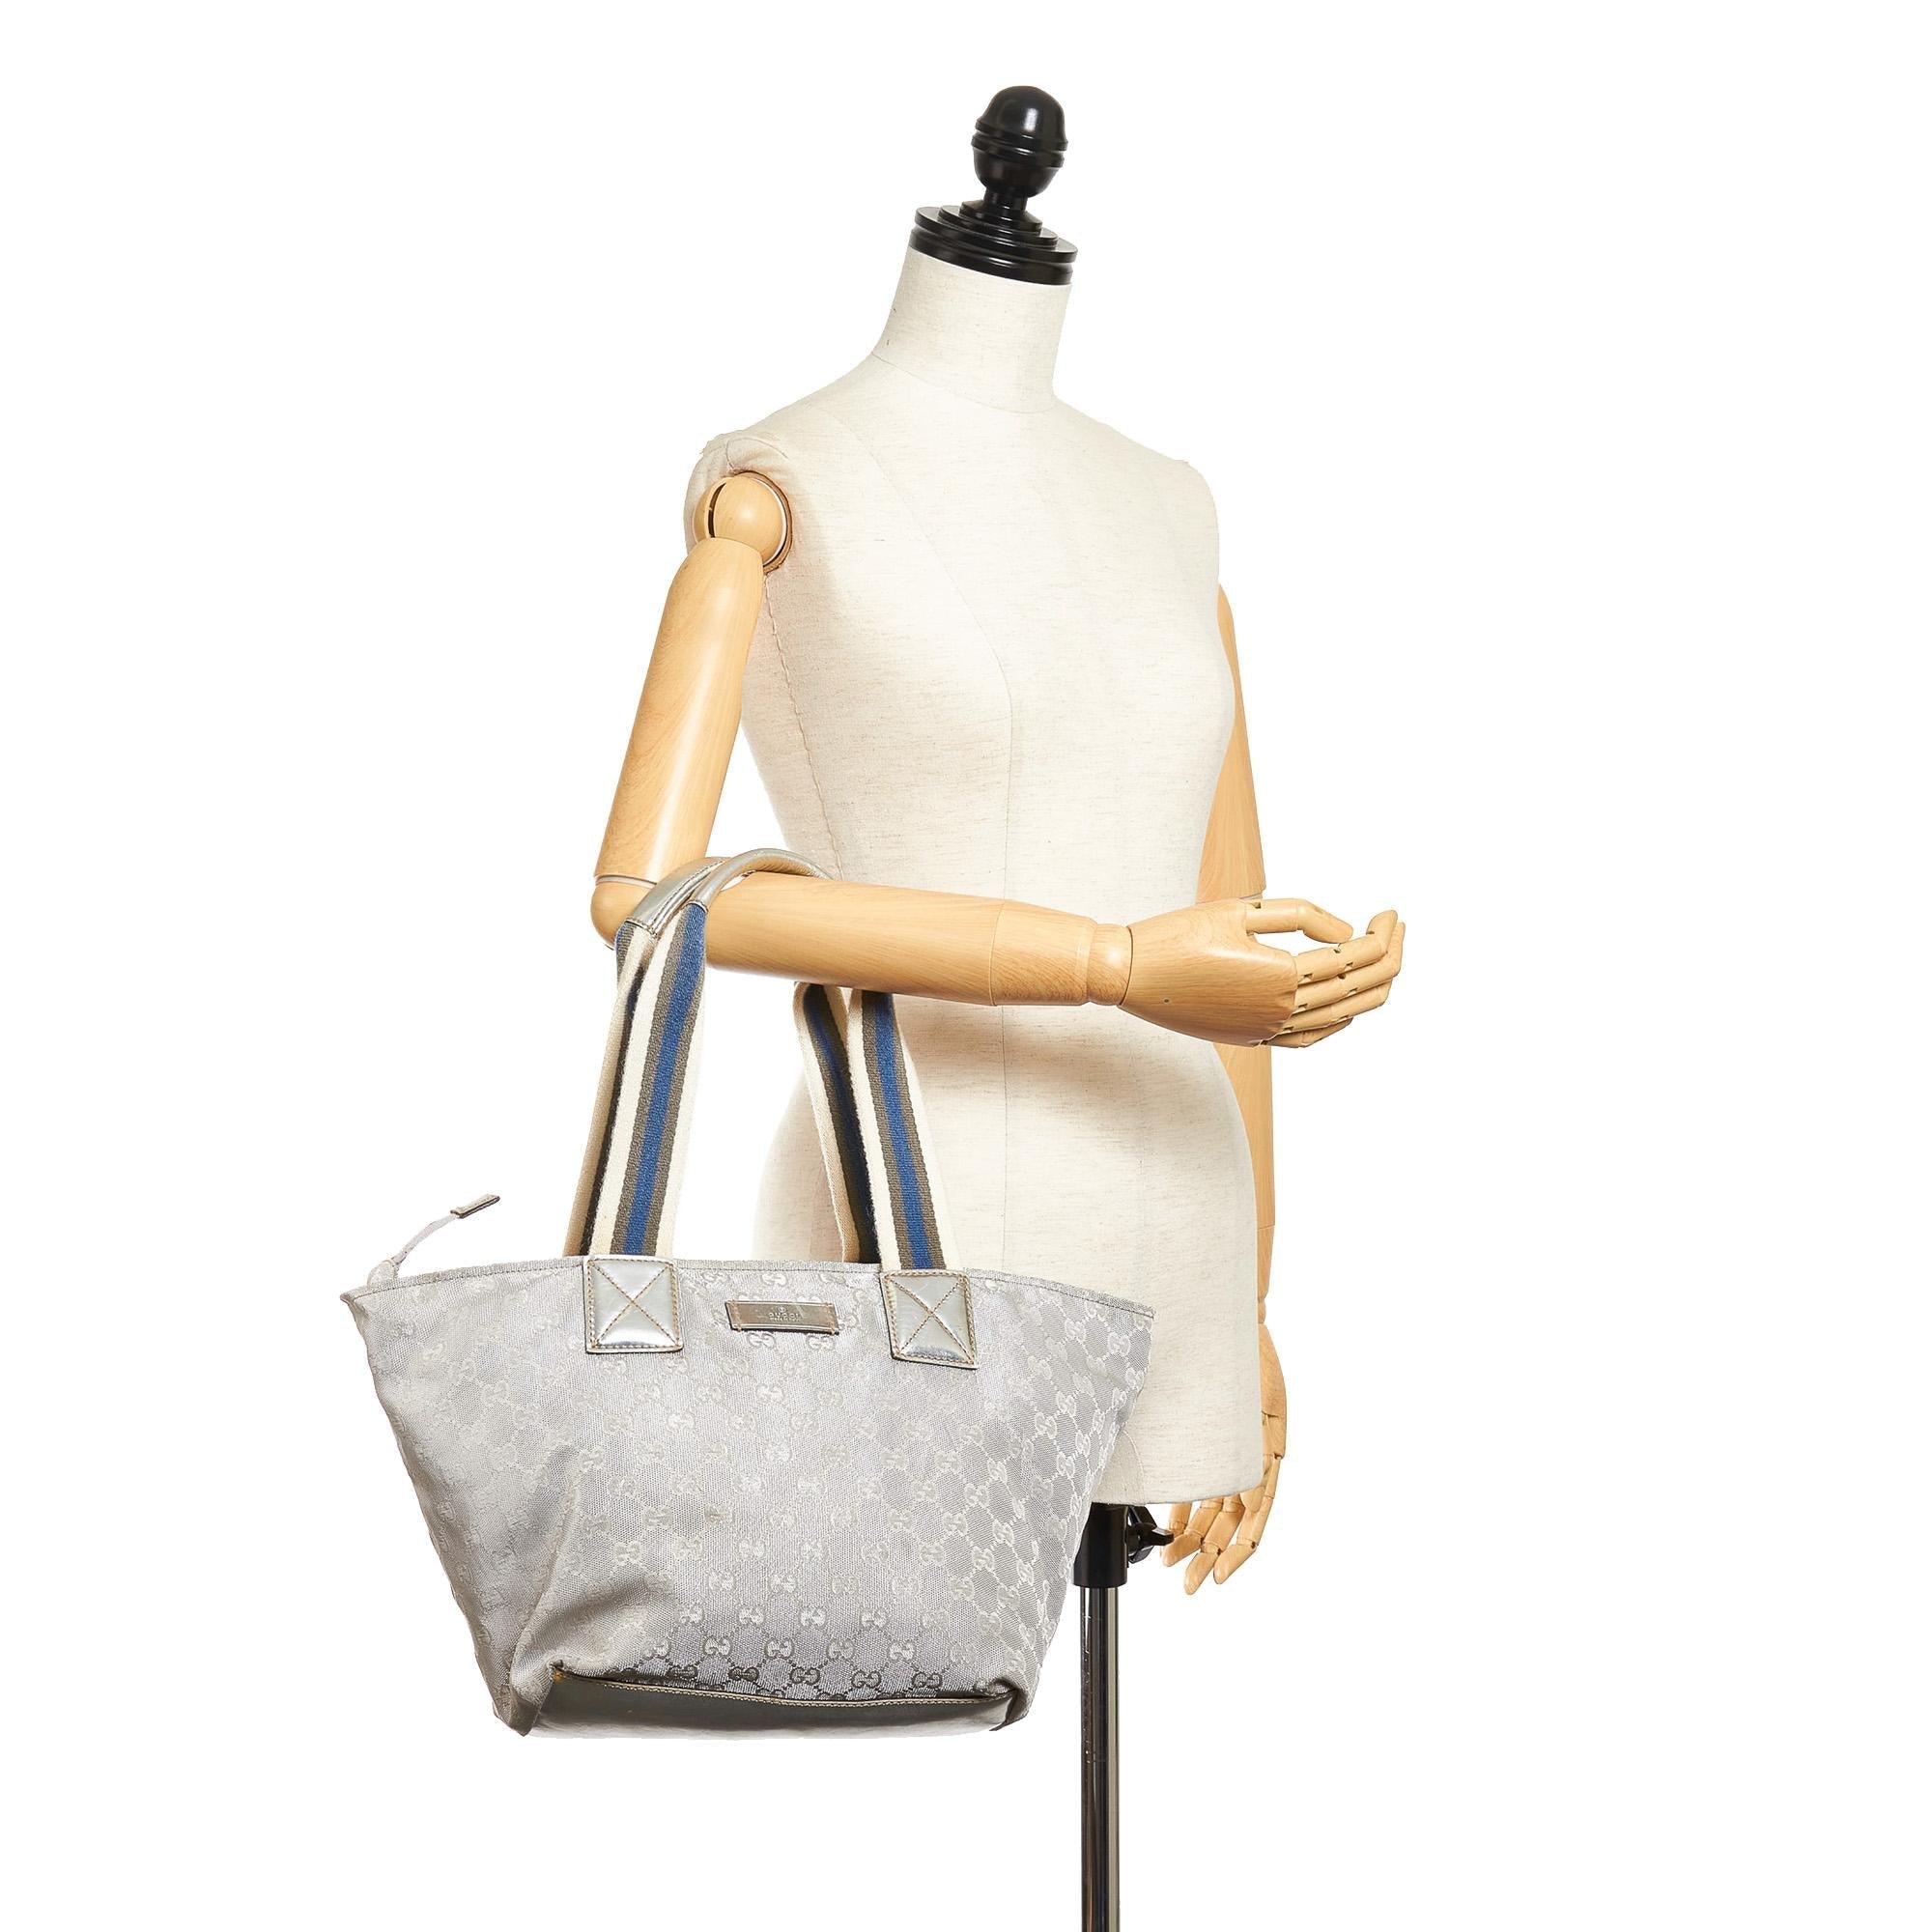 Gucci GG Canvas Web Handbag